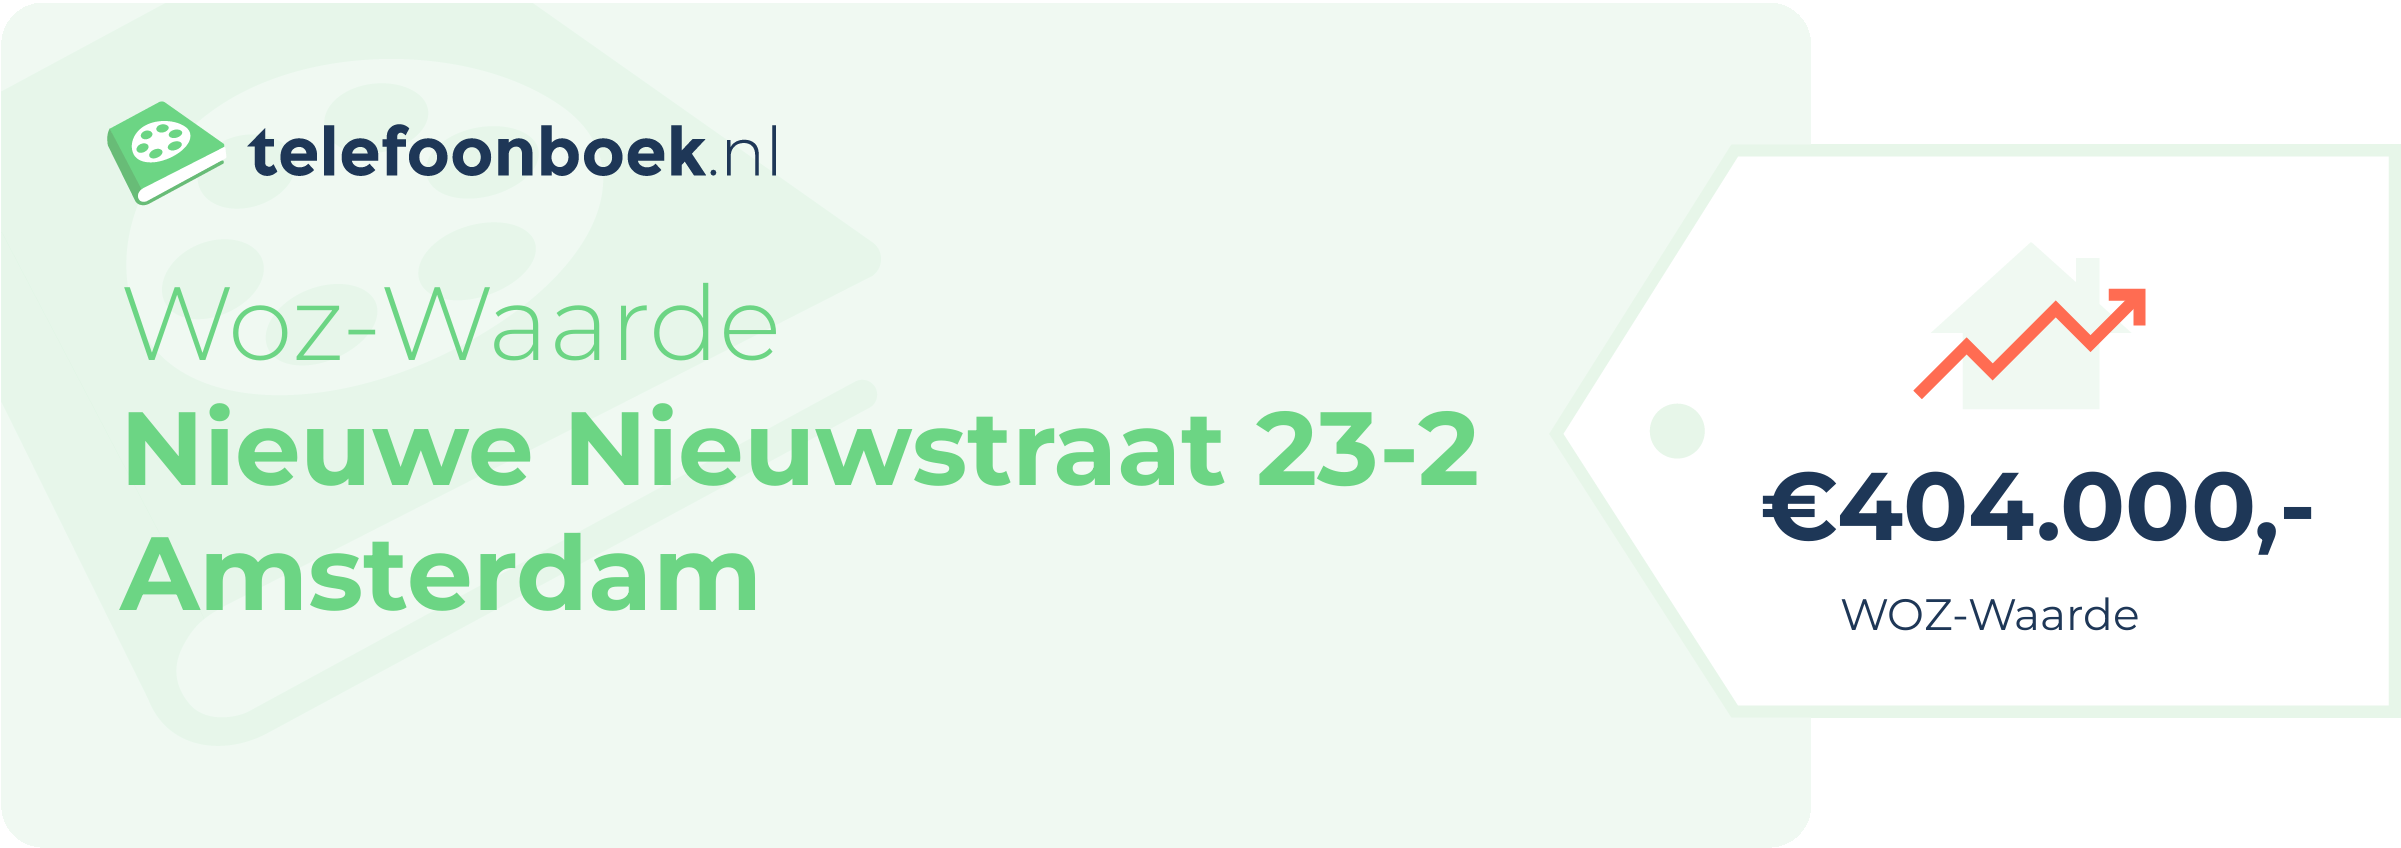 WOZ-waarde Nieuwe Nieuwstraat 23-2 Amsterdam